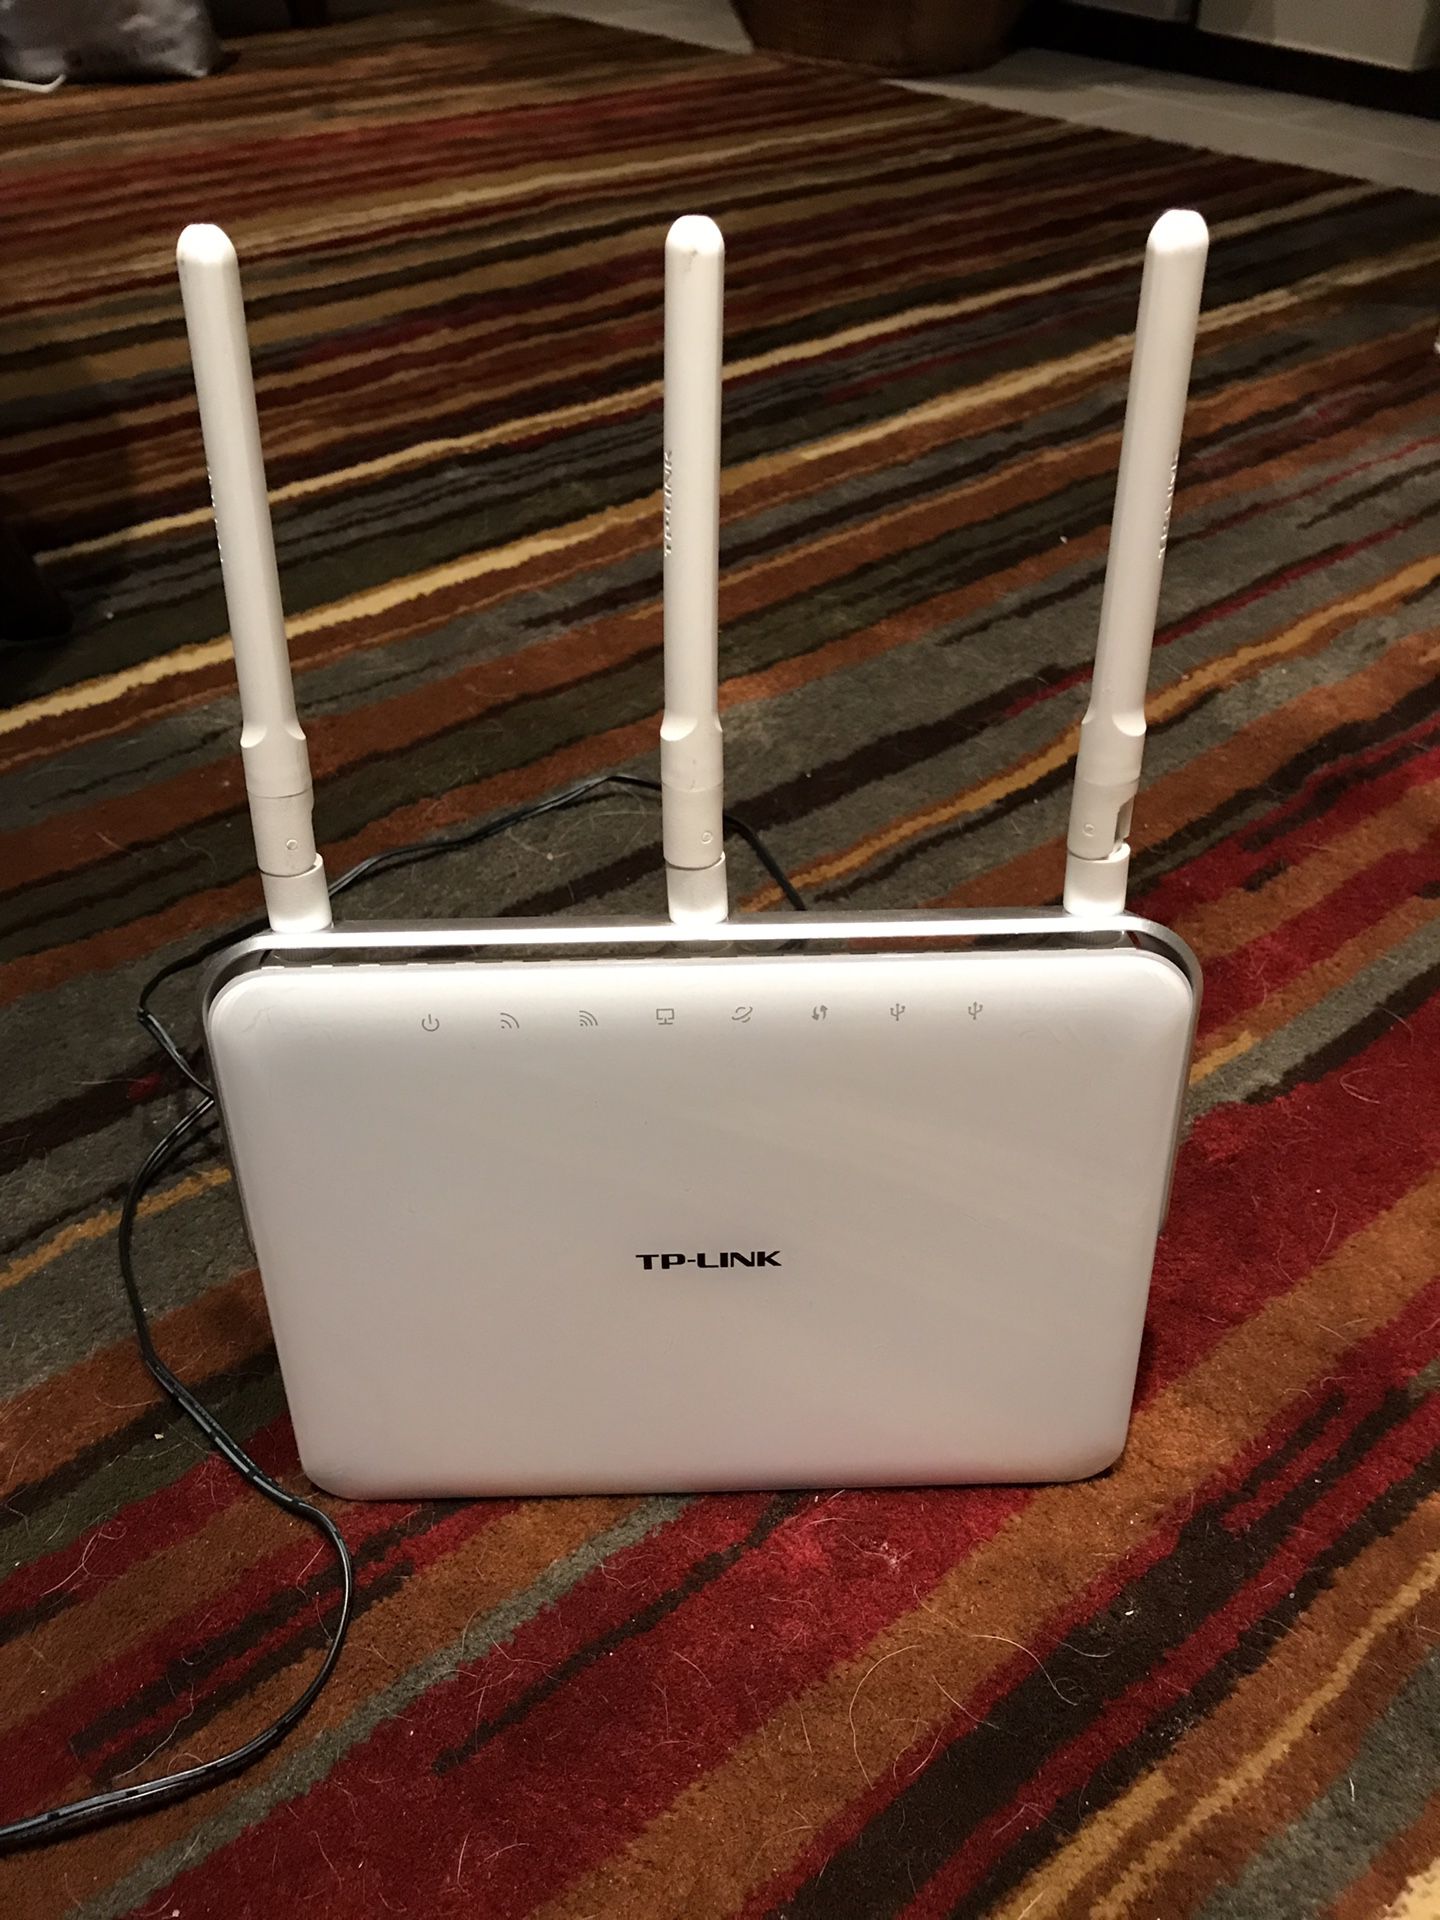 TP-Link AC1900 Archer C9 Dual-band gigabit wireless router